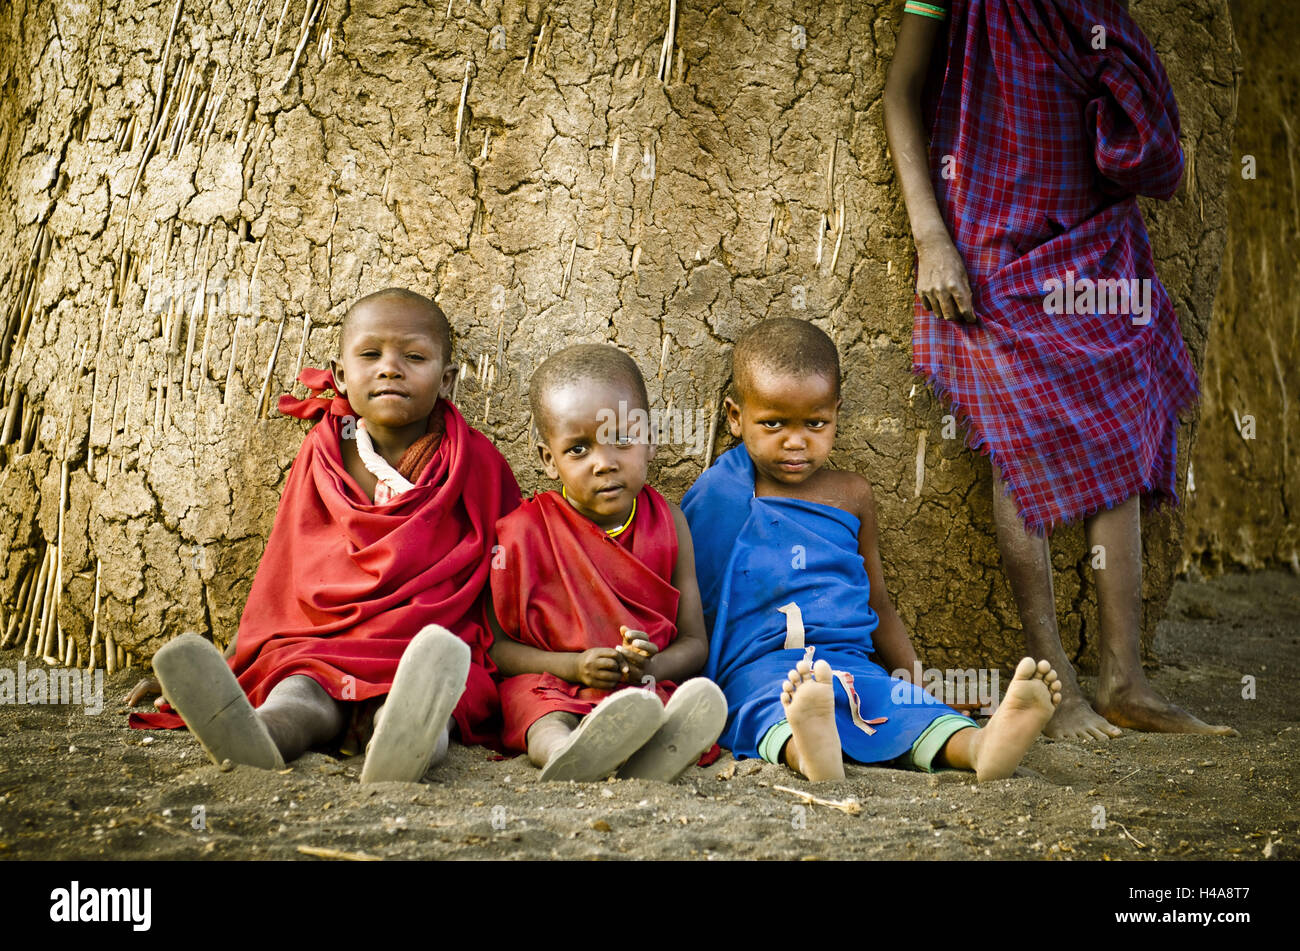 Africa, East Africa, Tanzania, Lake Natron, Maasai, children, Stock Photo